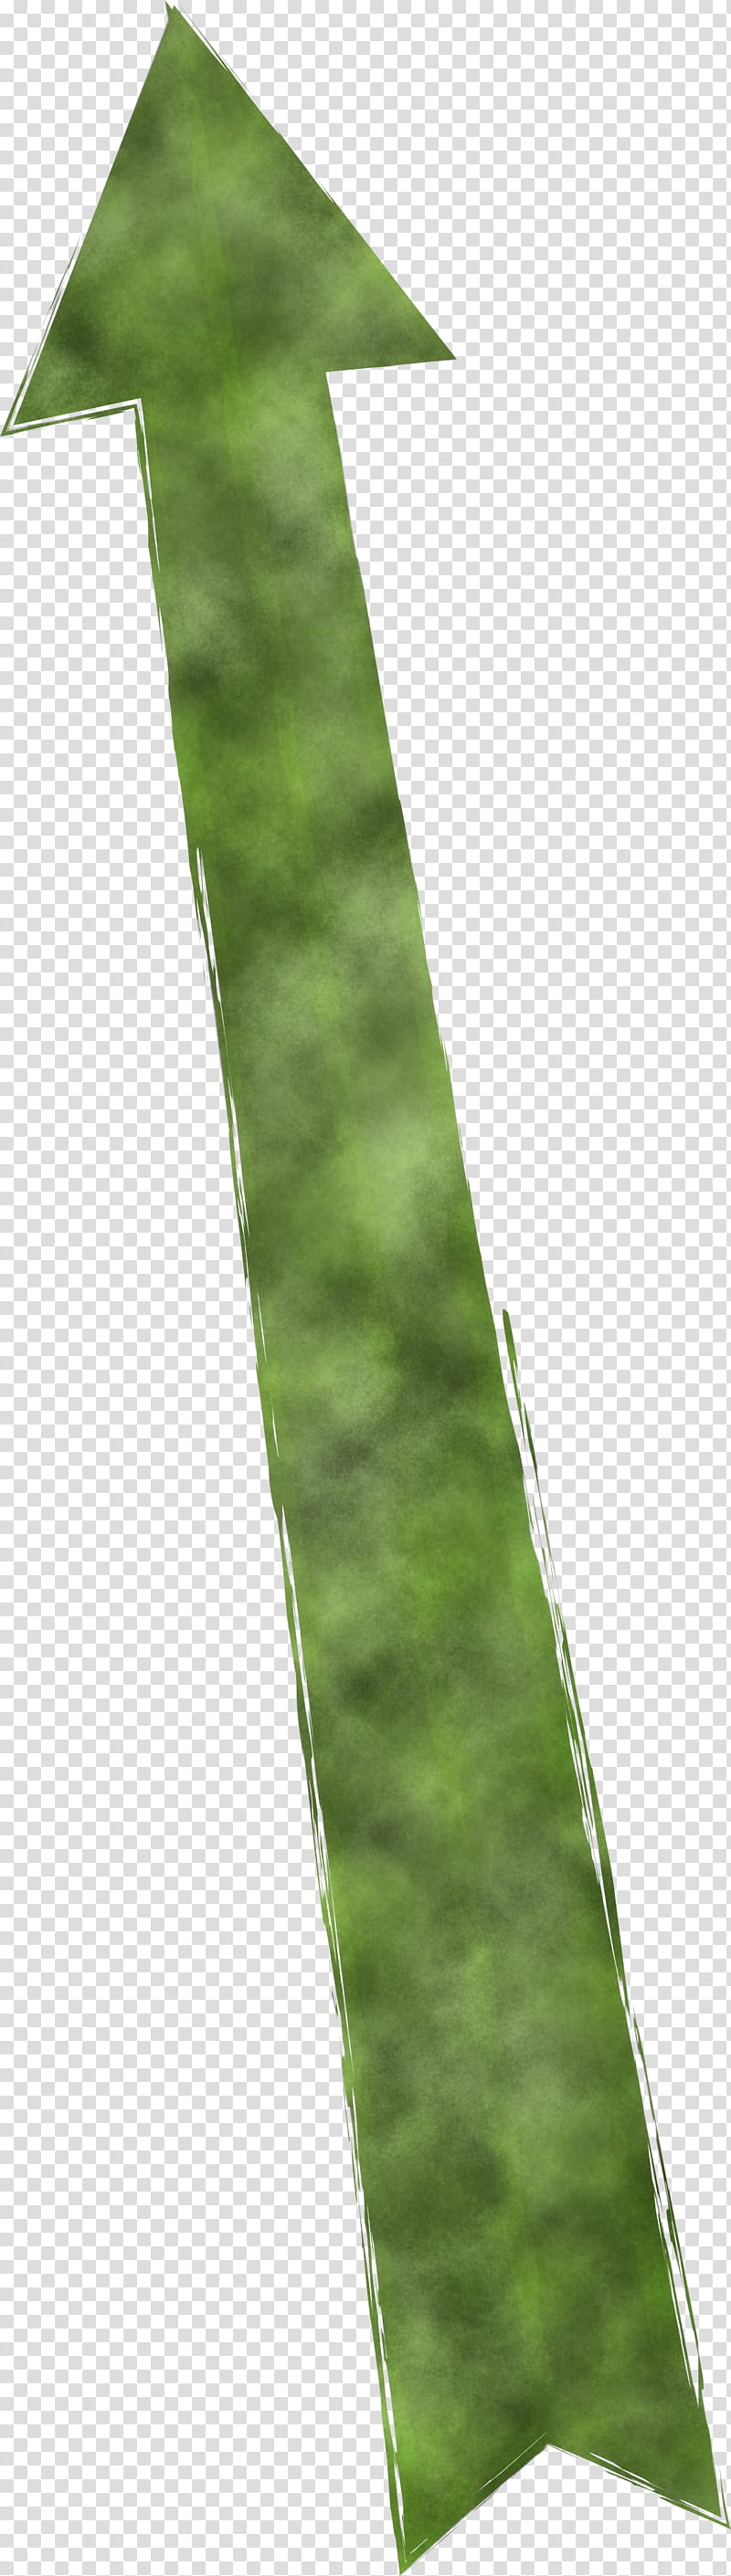 Rising Arrow, Green, Leaf, Plant, Plant Stem transparent background PNG clipart